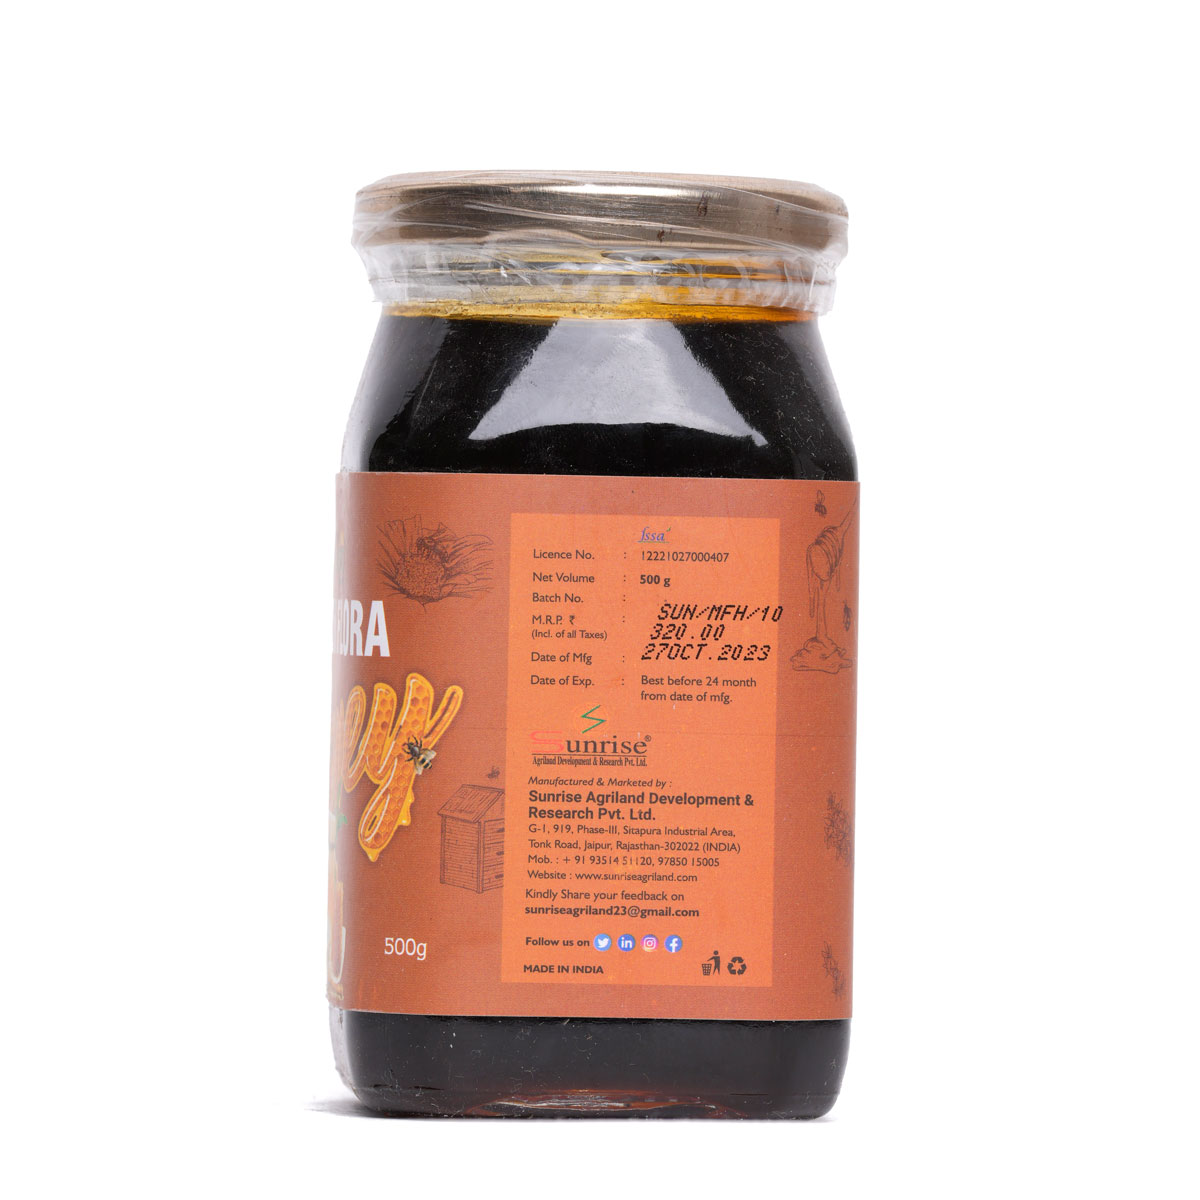 Herbal Honey